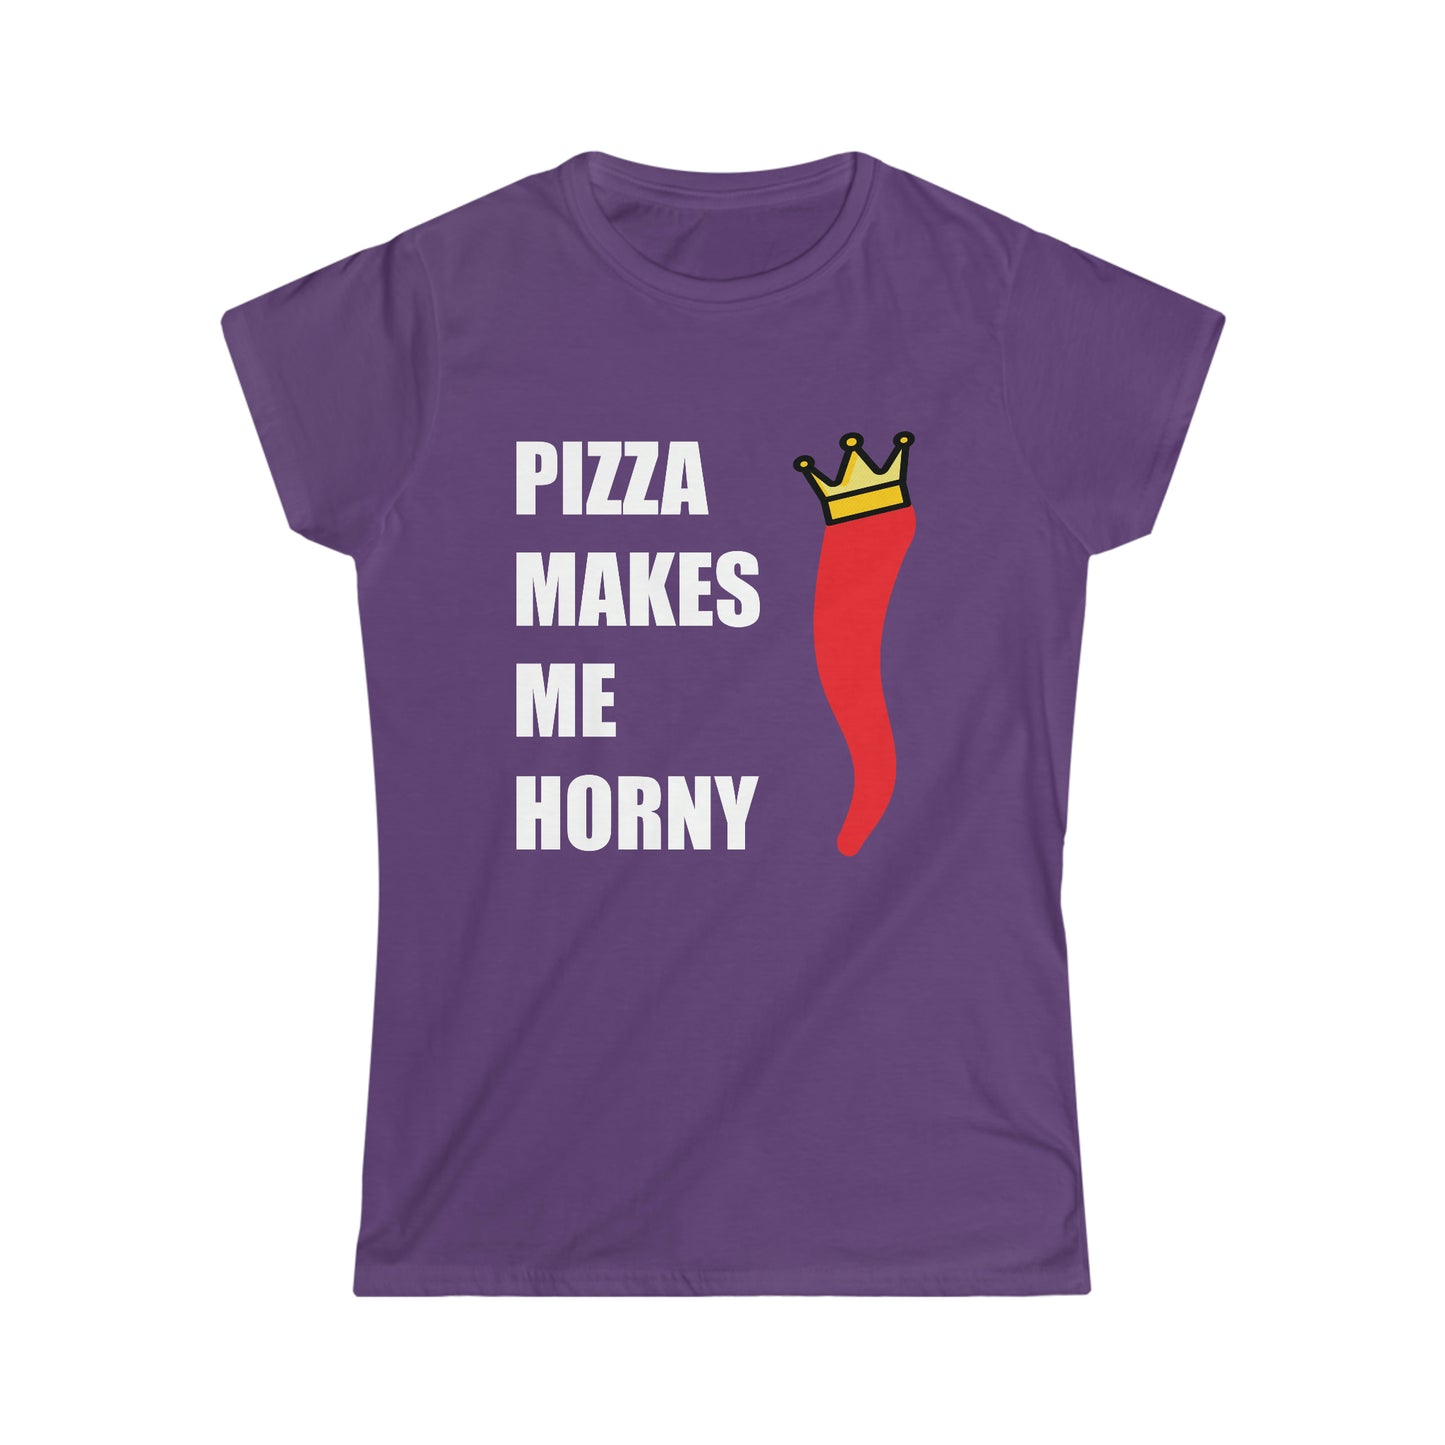 PIZZA MAKES ME HORNY